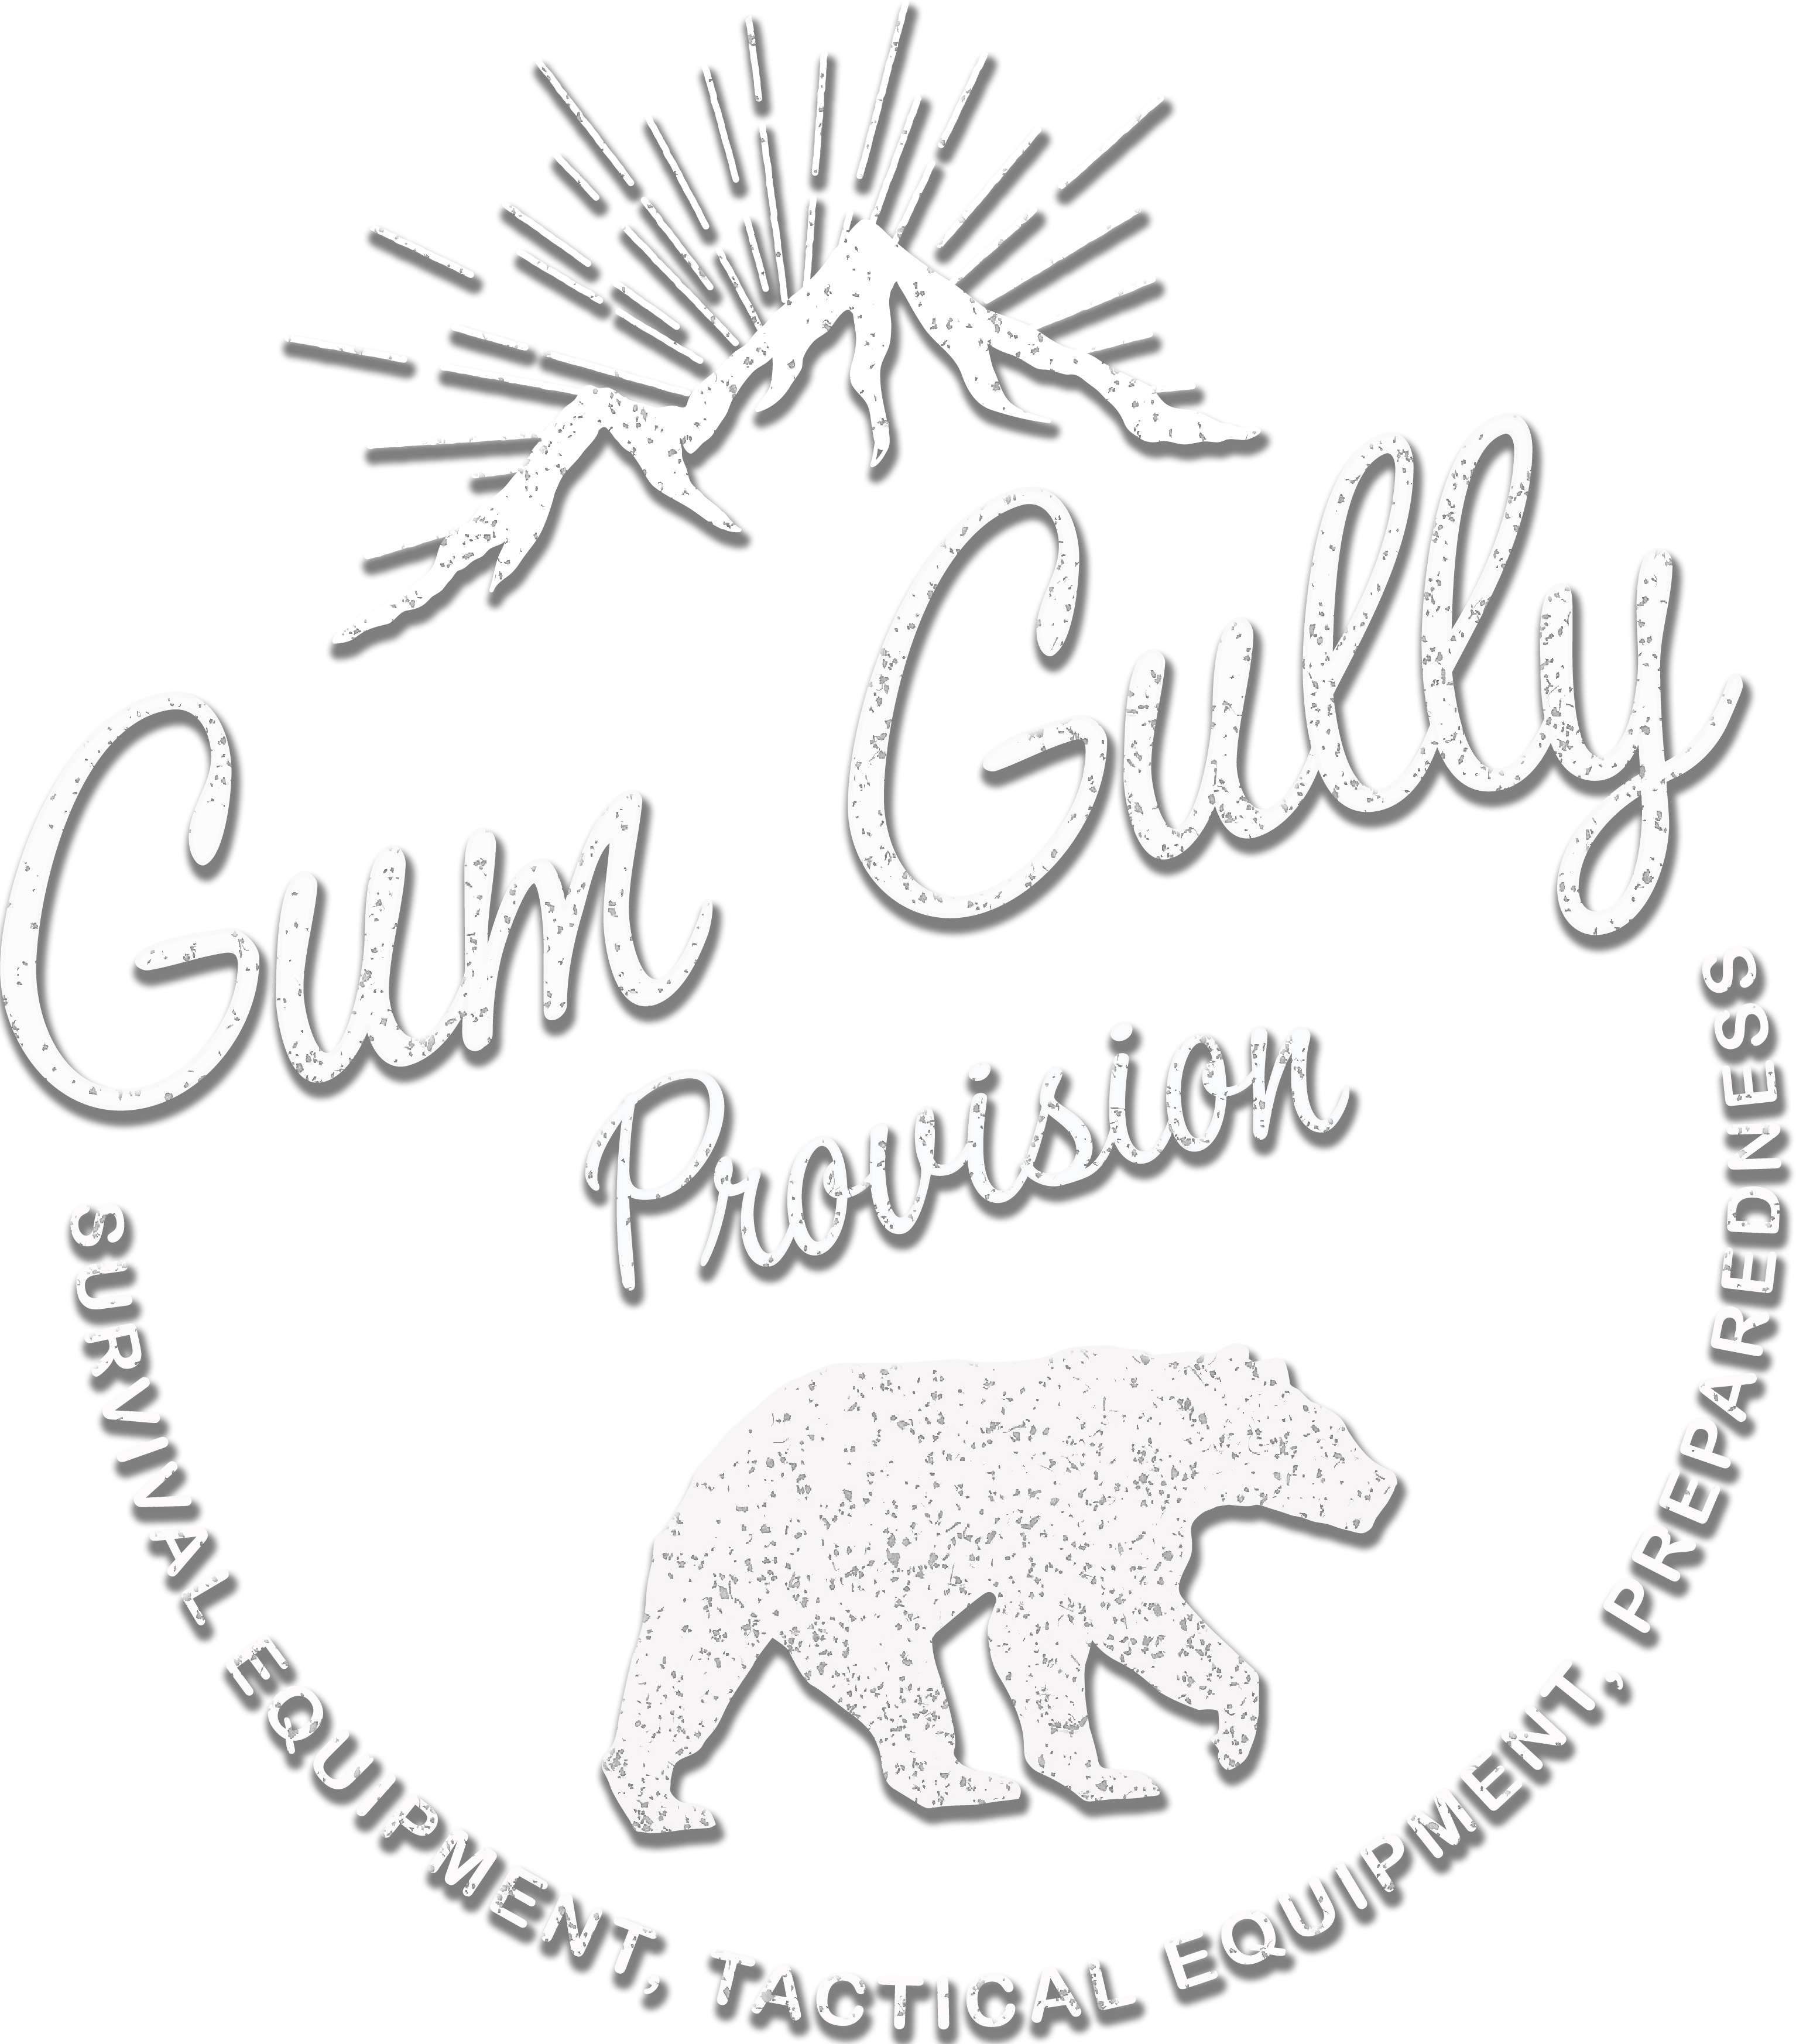 Gum Gully Provision